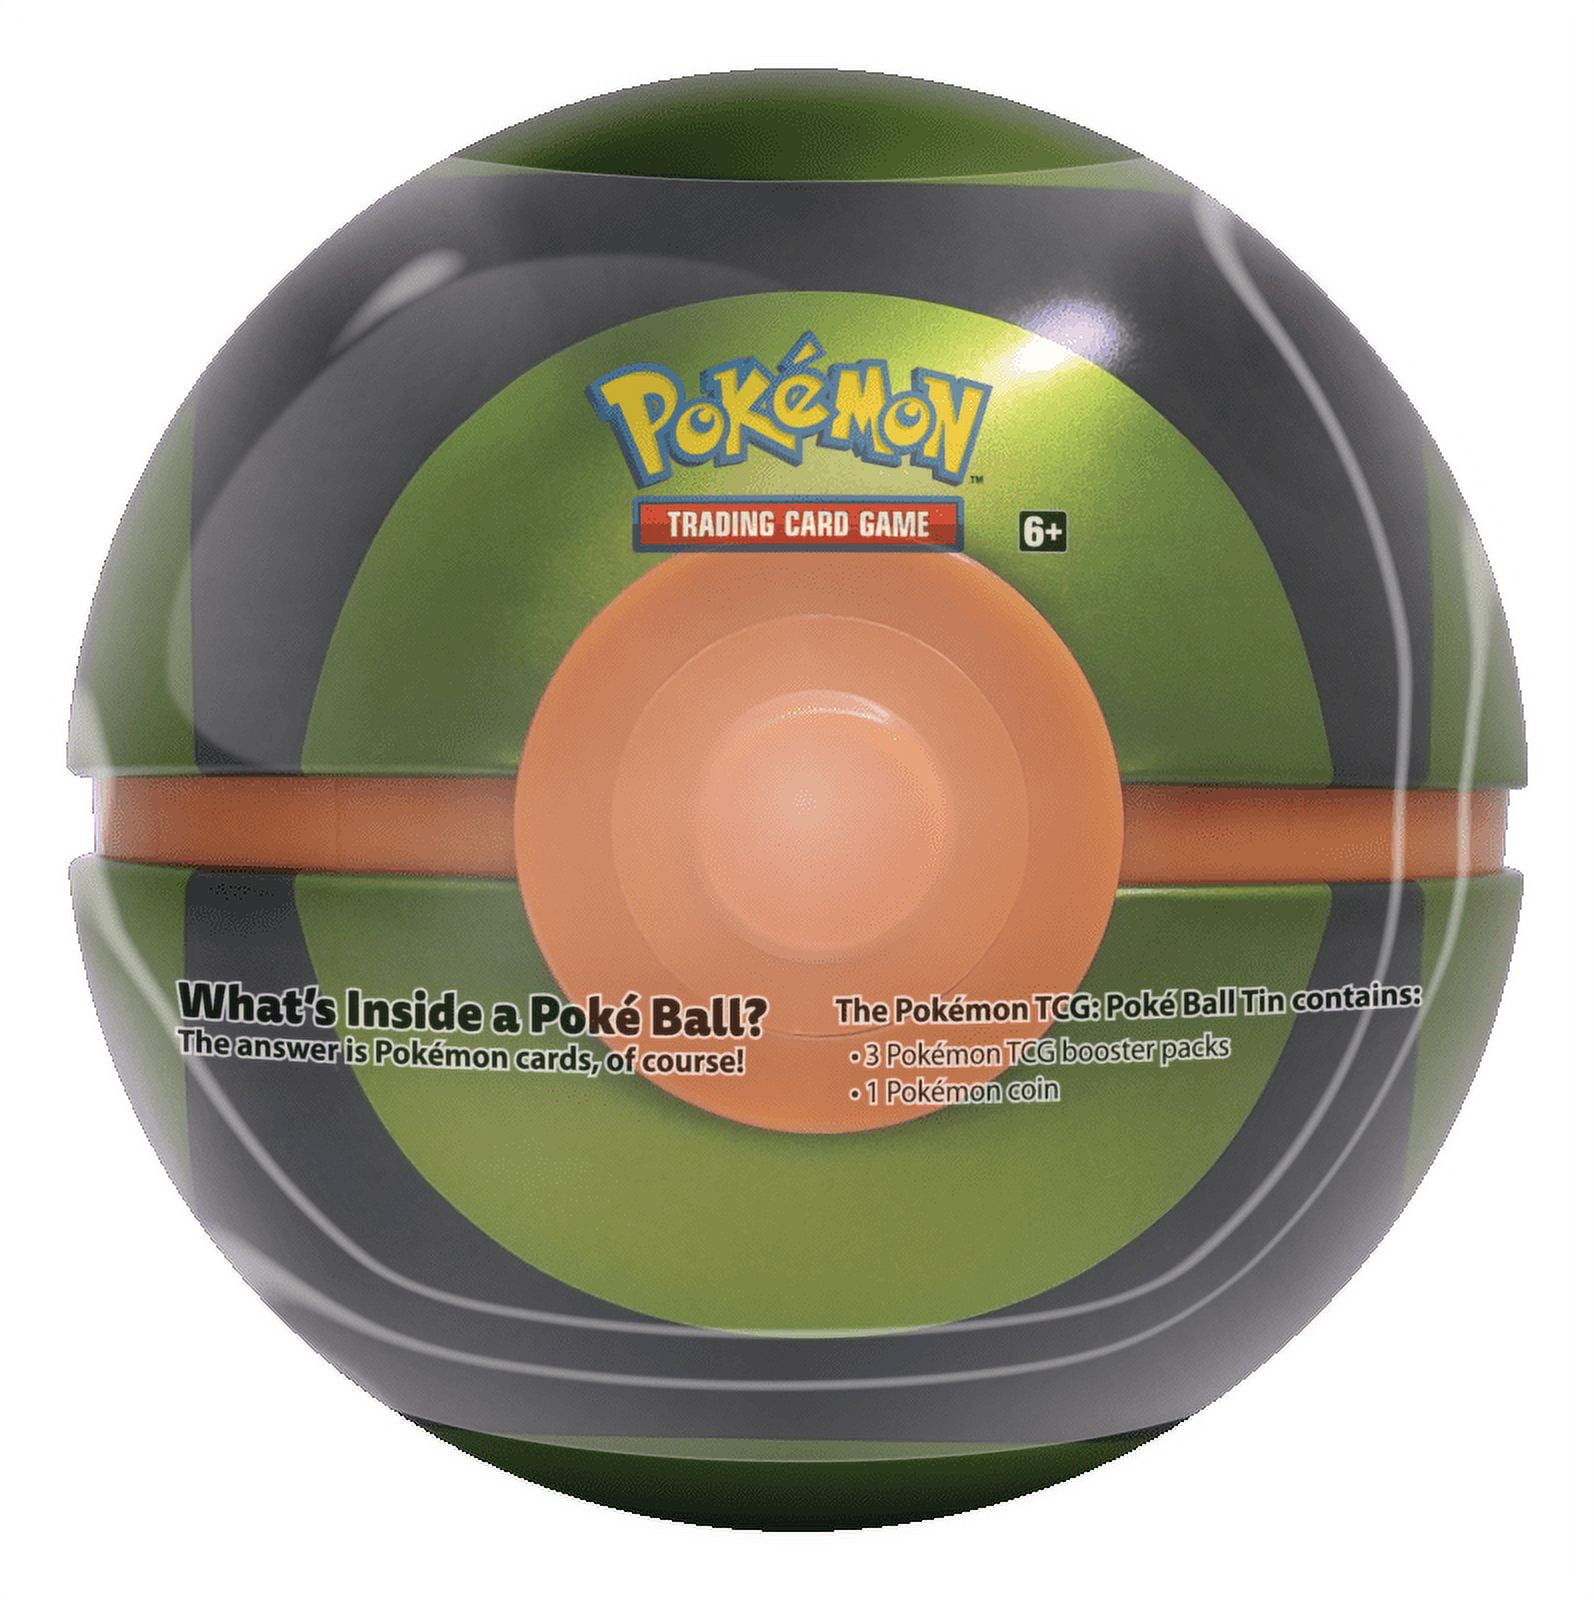 Pokémon Summer Days Snack Bowls (4-Pack)